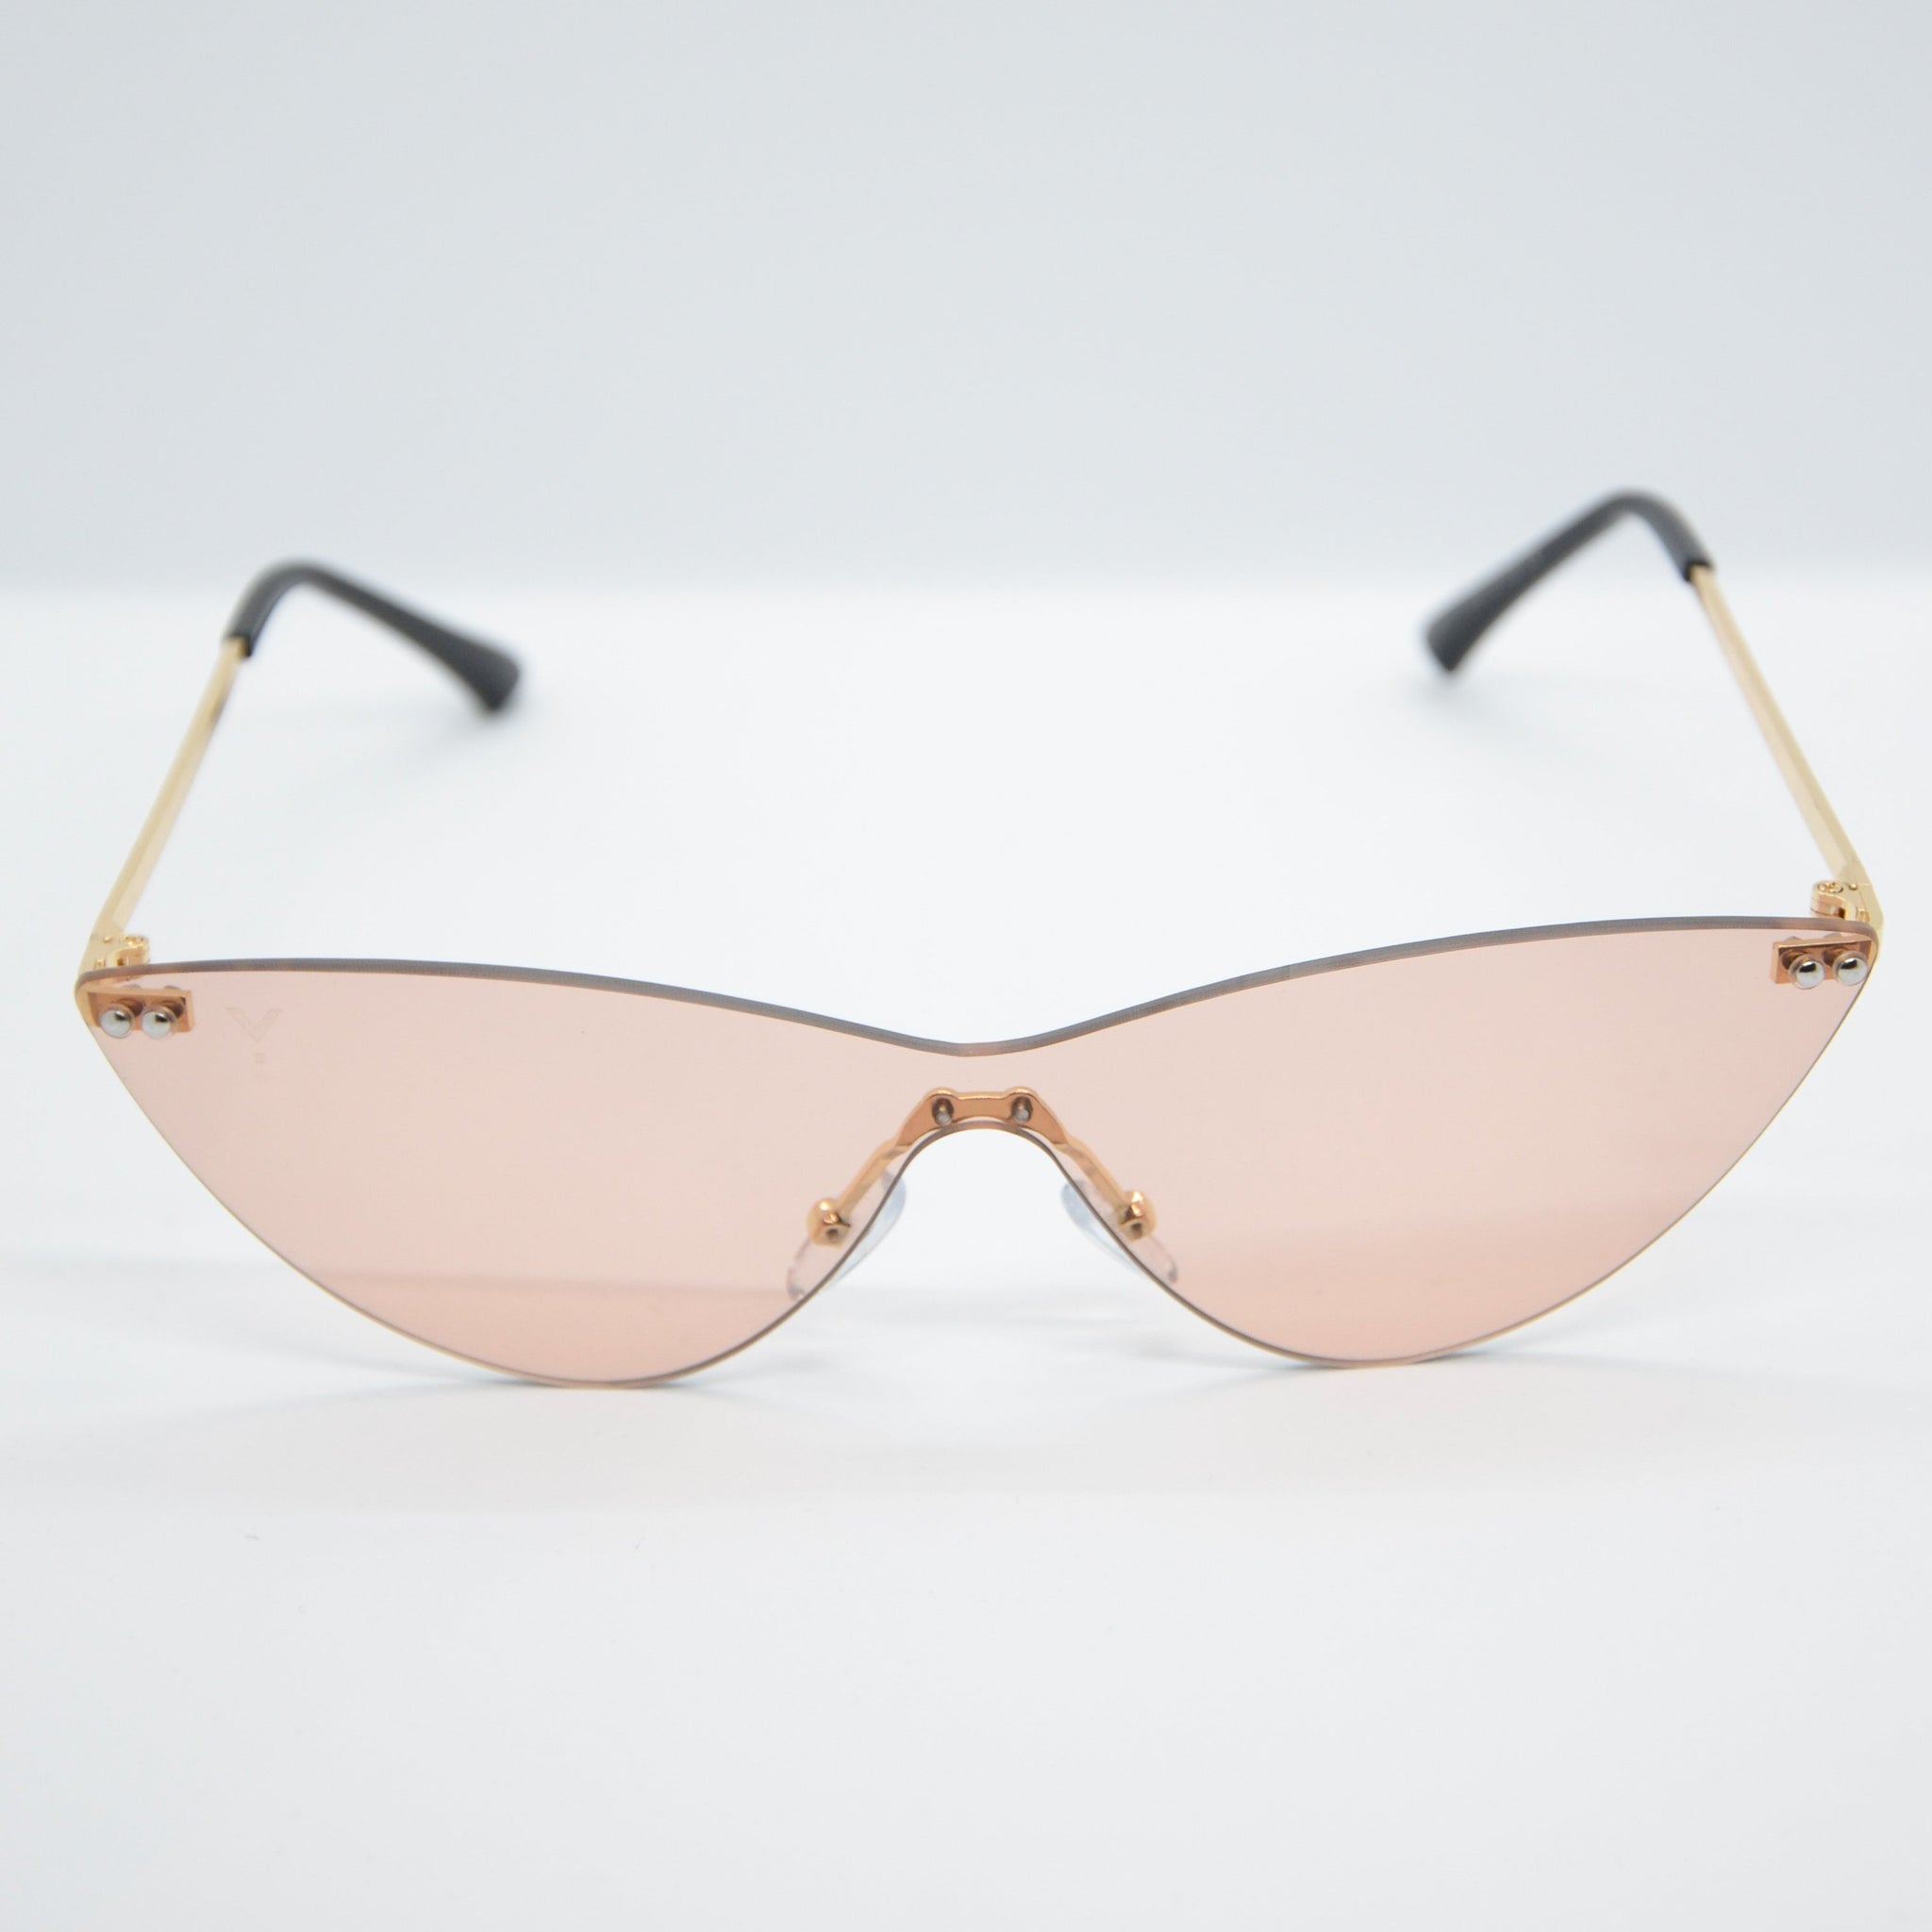 Inex - Sunglasses | AVAYOS